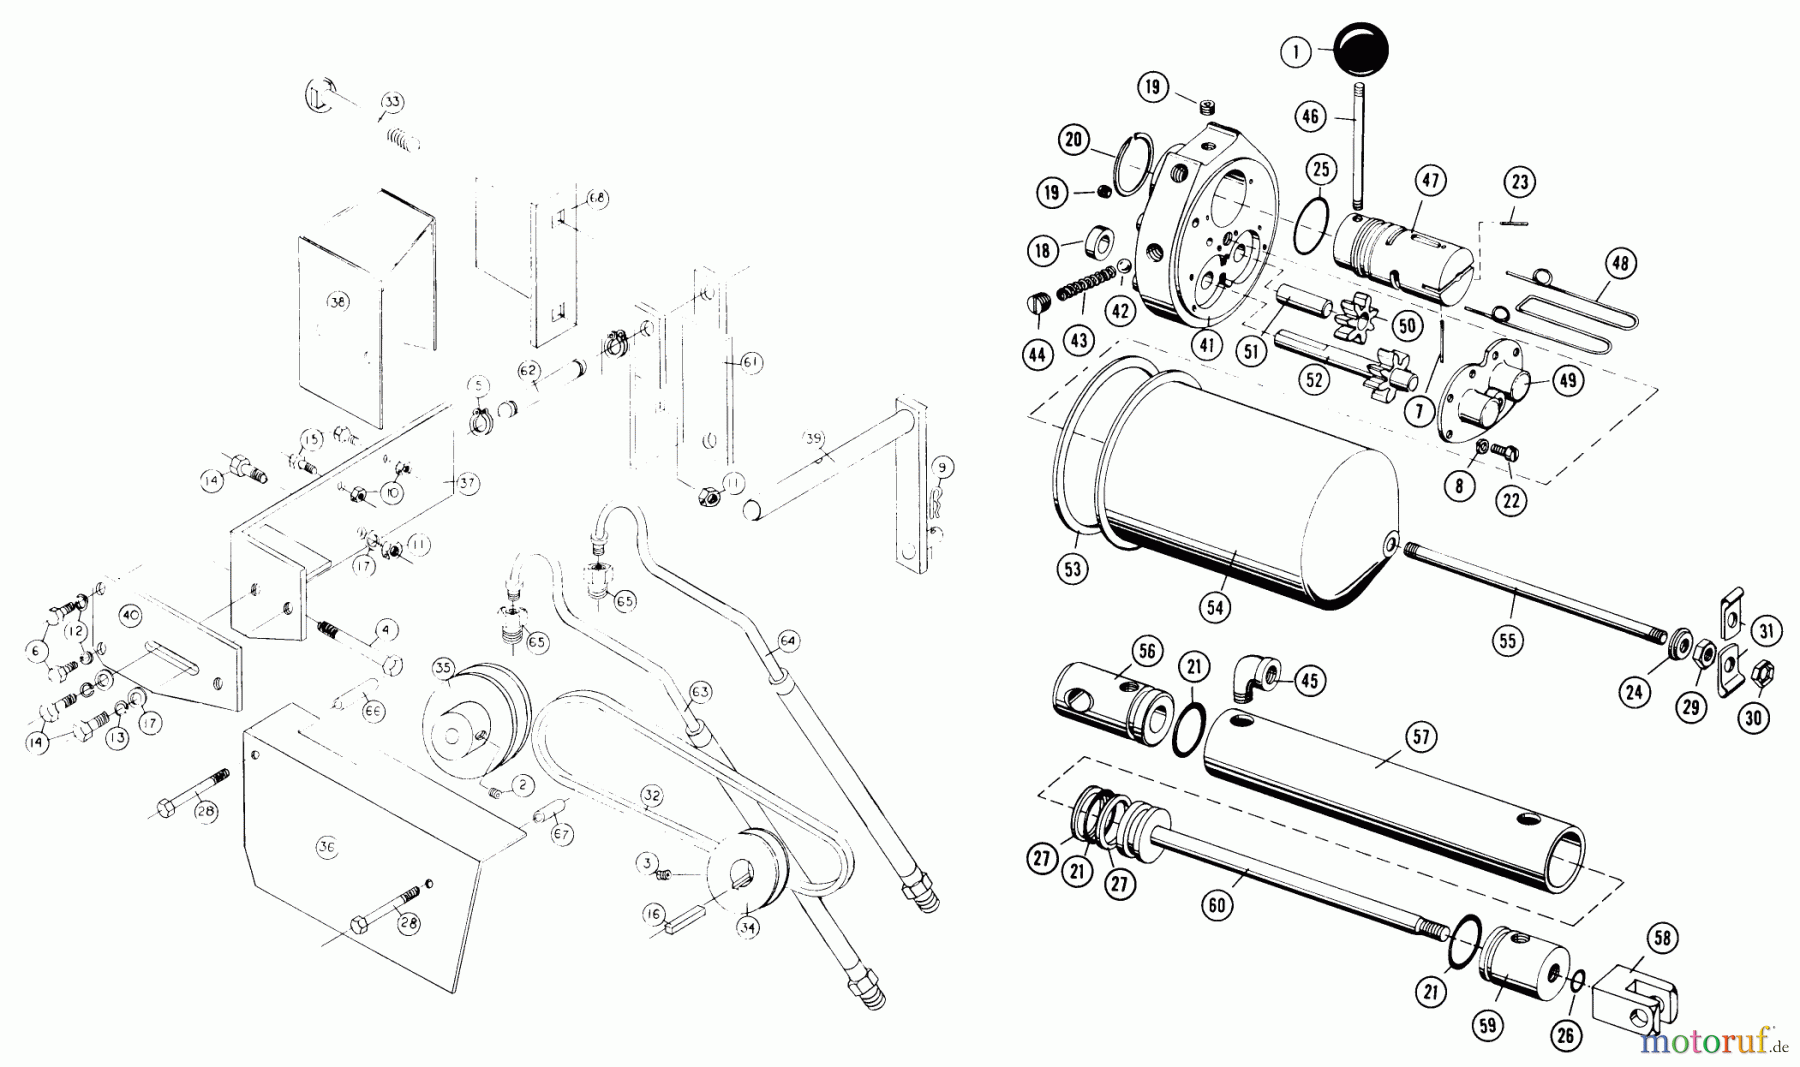  Toro Neu Accessories, Mower HL-5 - Toro Head/Tail Light Kit, 1965 REVISED PARTS LIST